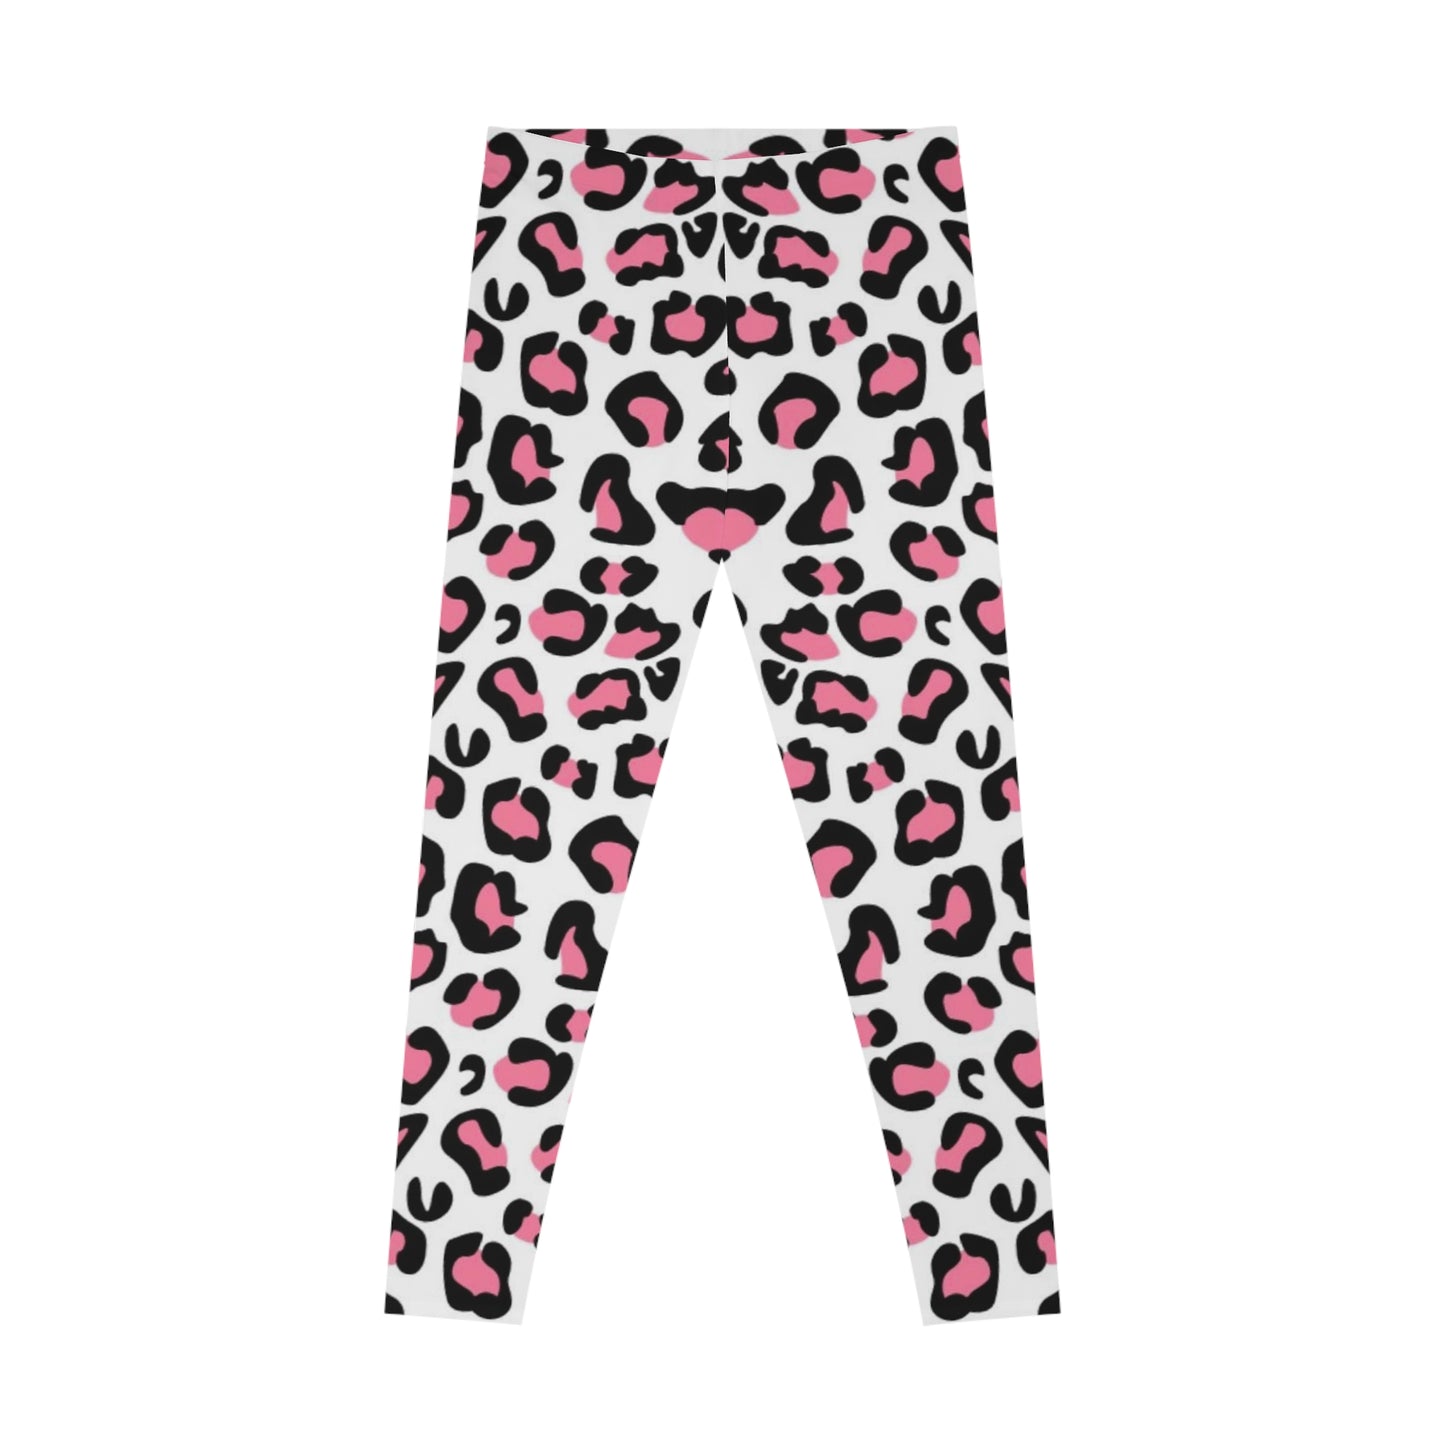 Women's Stretchy Leggings...Pink Leopard